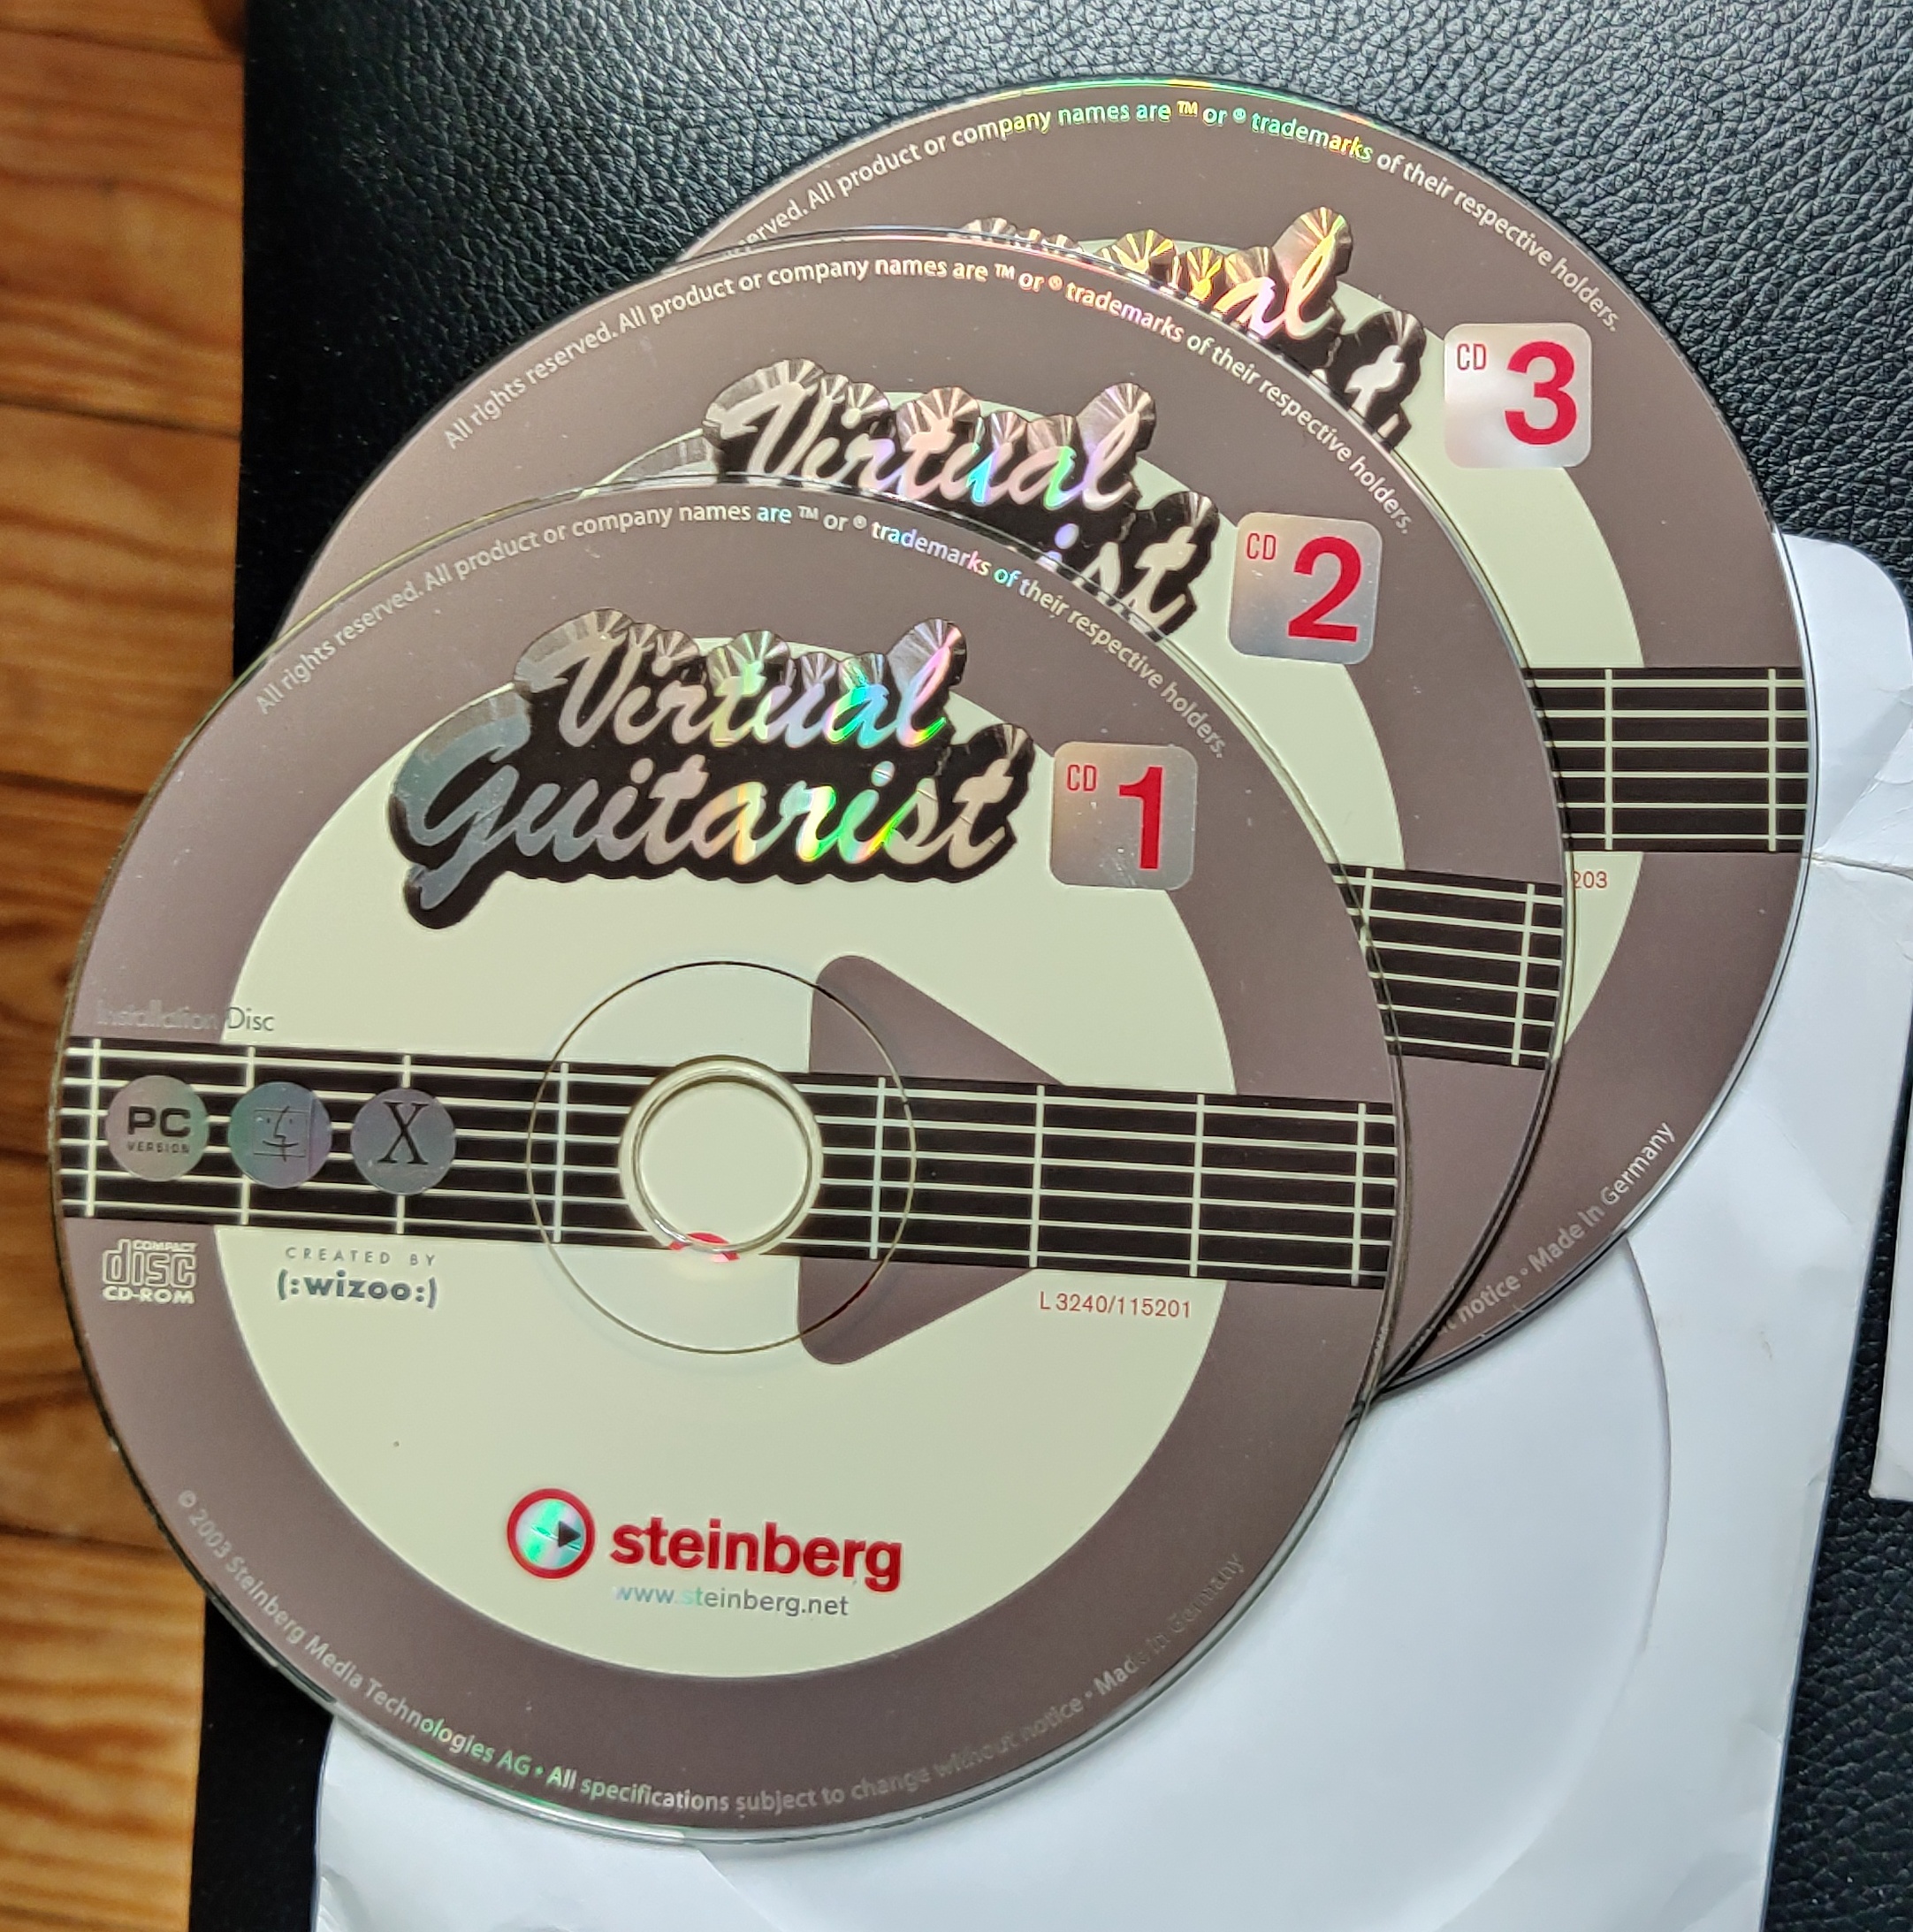 steinberg virtual guitarist 2 license